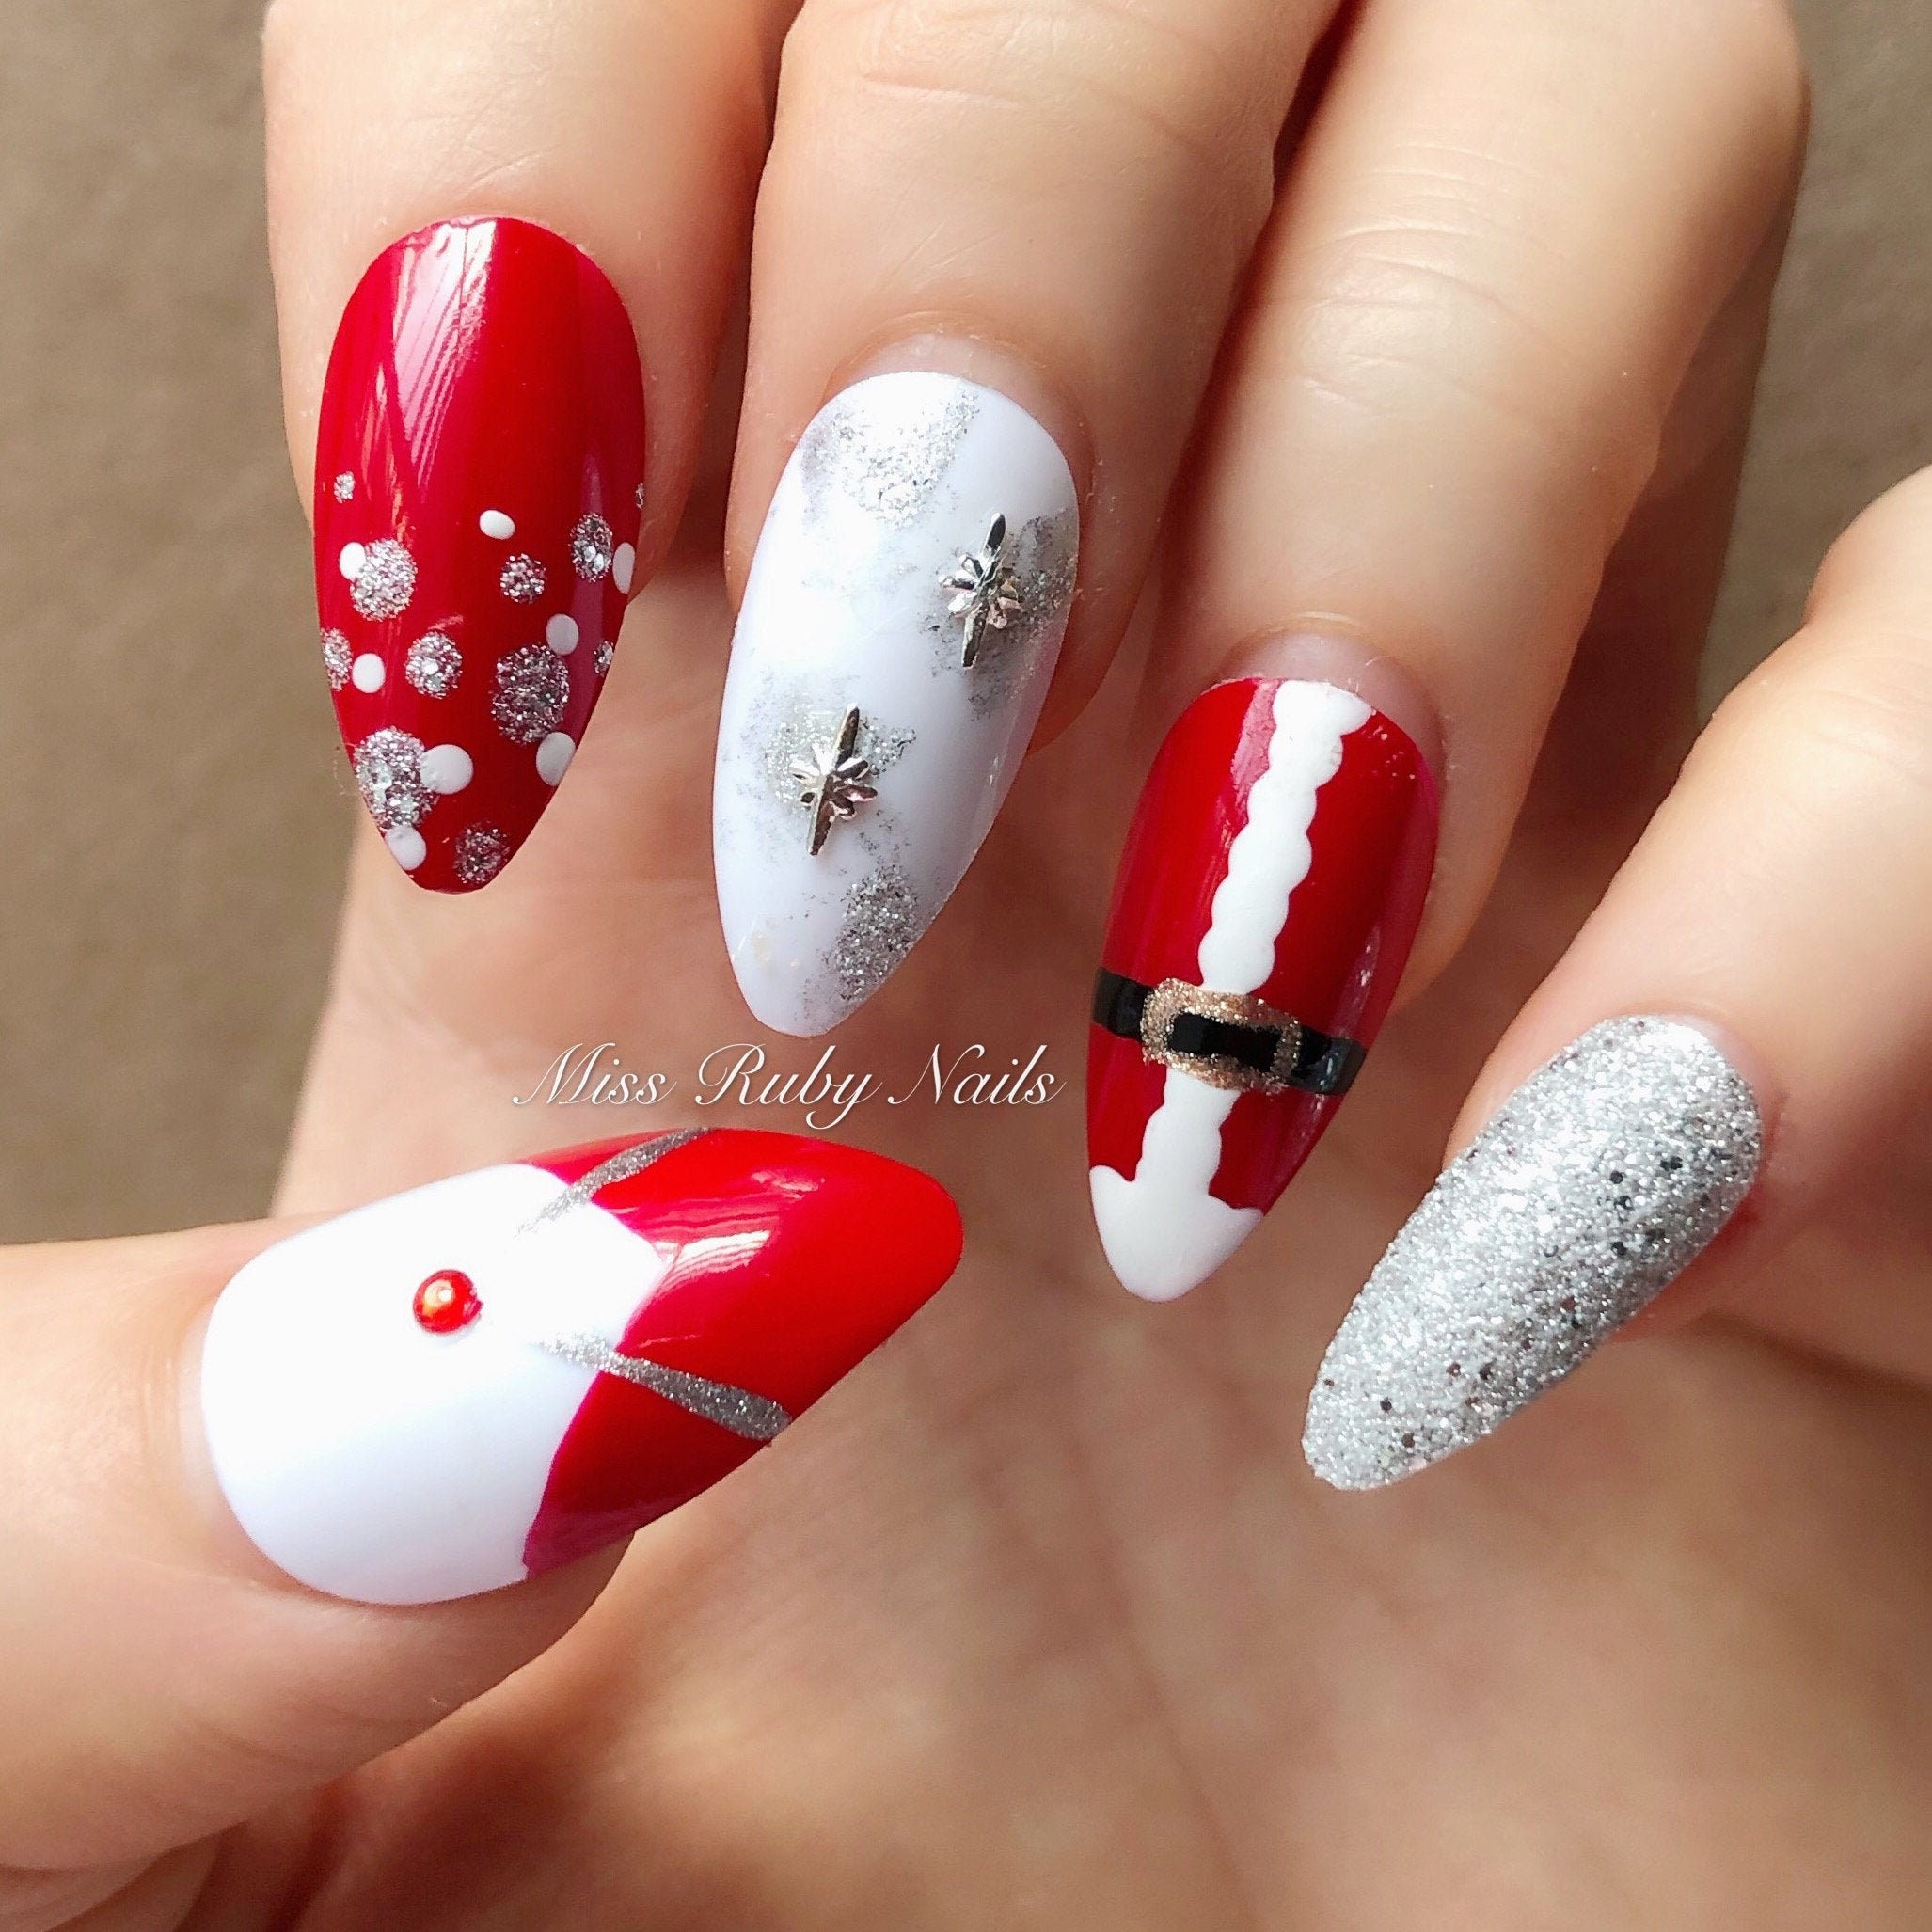 Christmas nails - 14 easy festive nail art designs for 2017